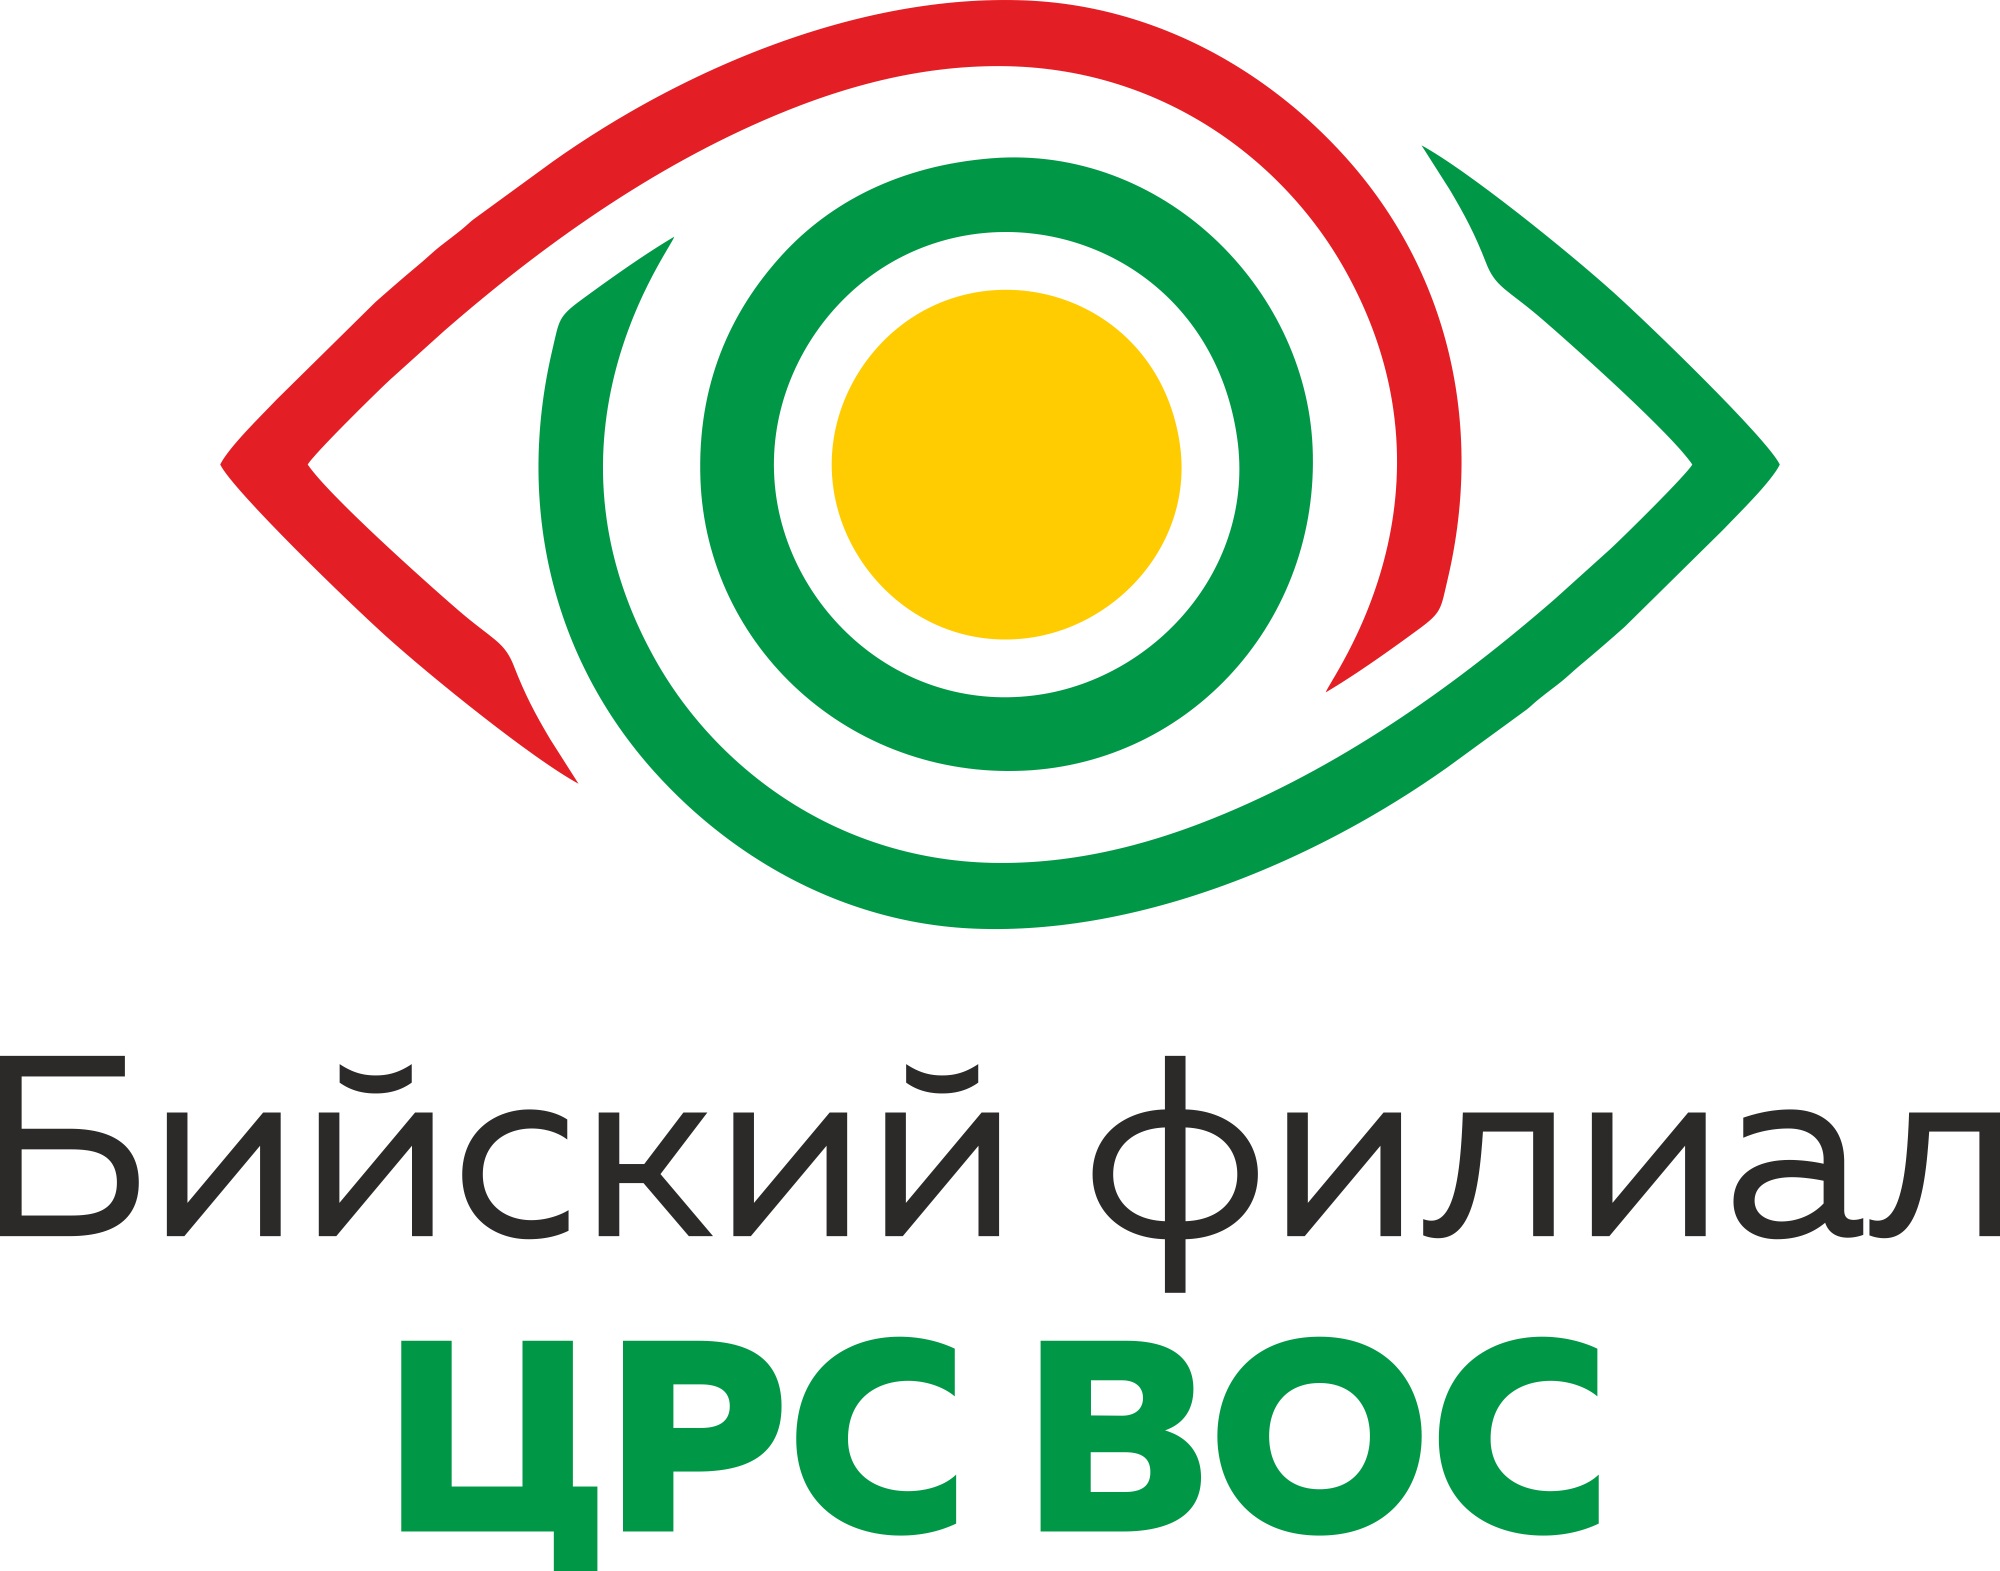 Логотип Бийского филиала ЦРС ВОС